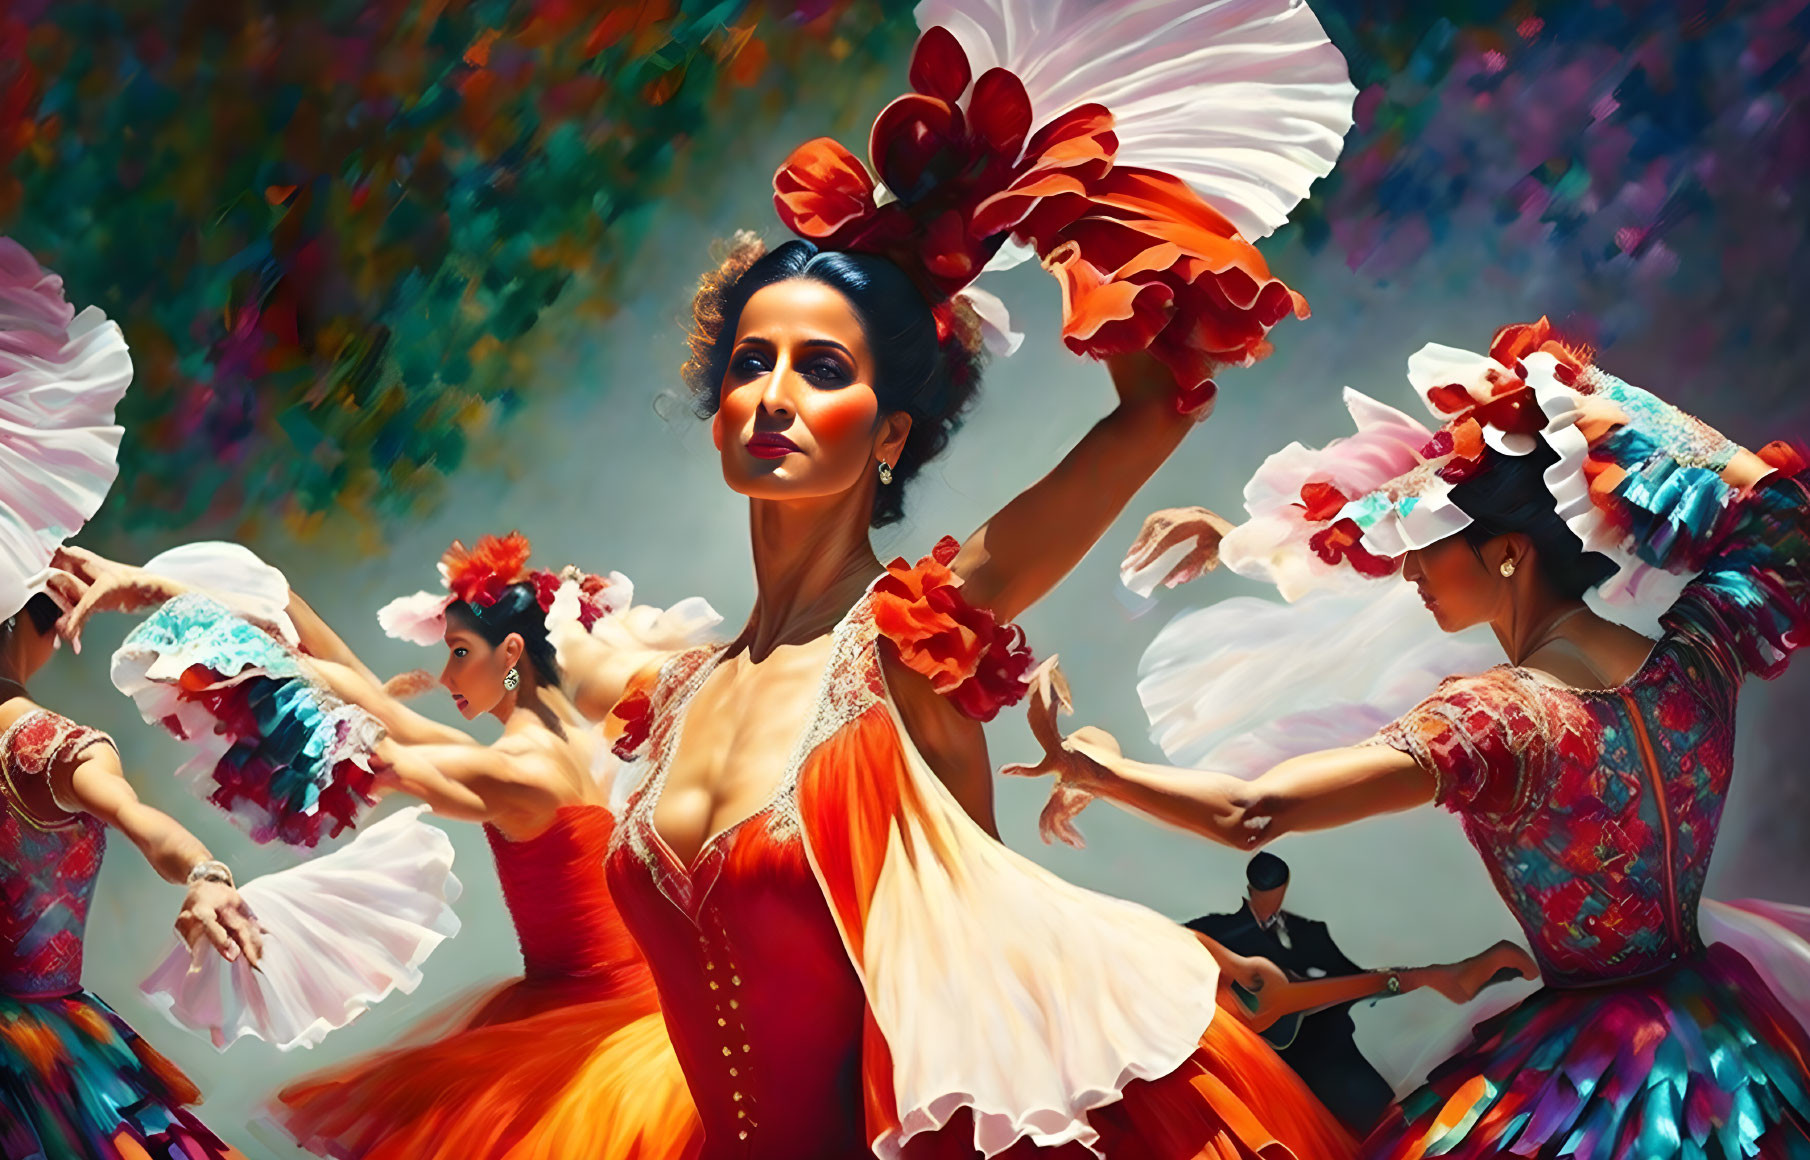 Colorful Flamenco Dance Scene with Woman in Orange Dress